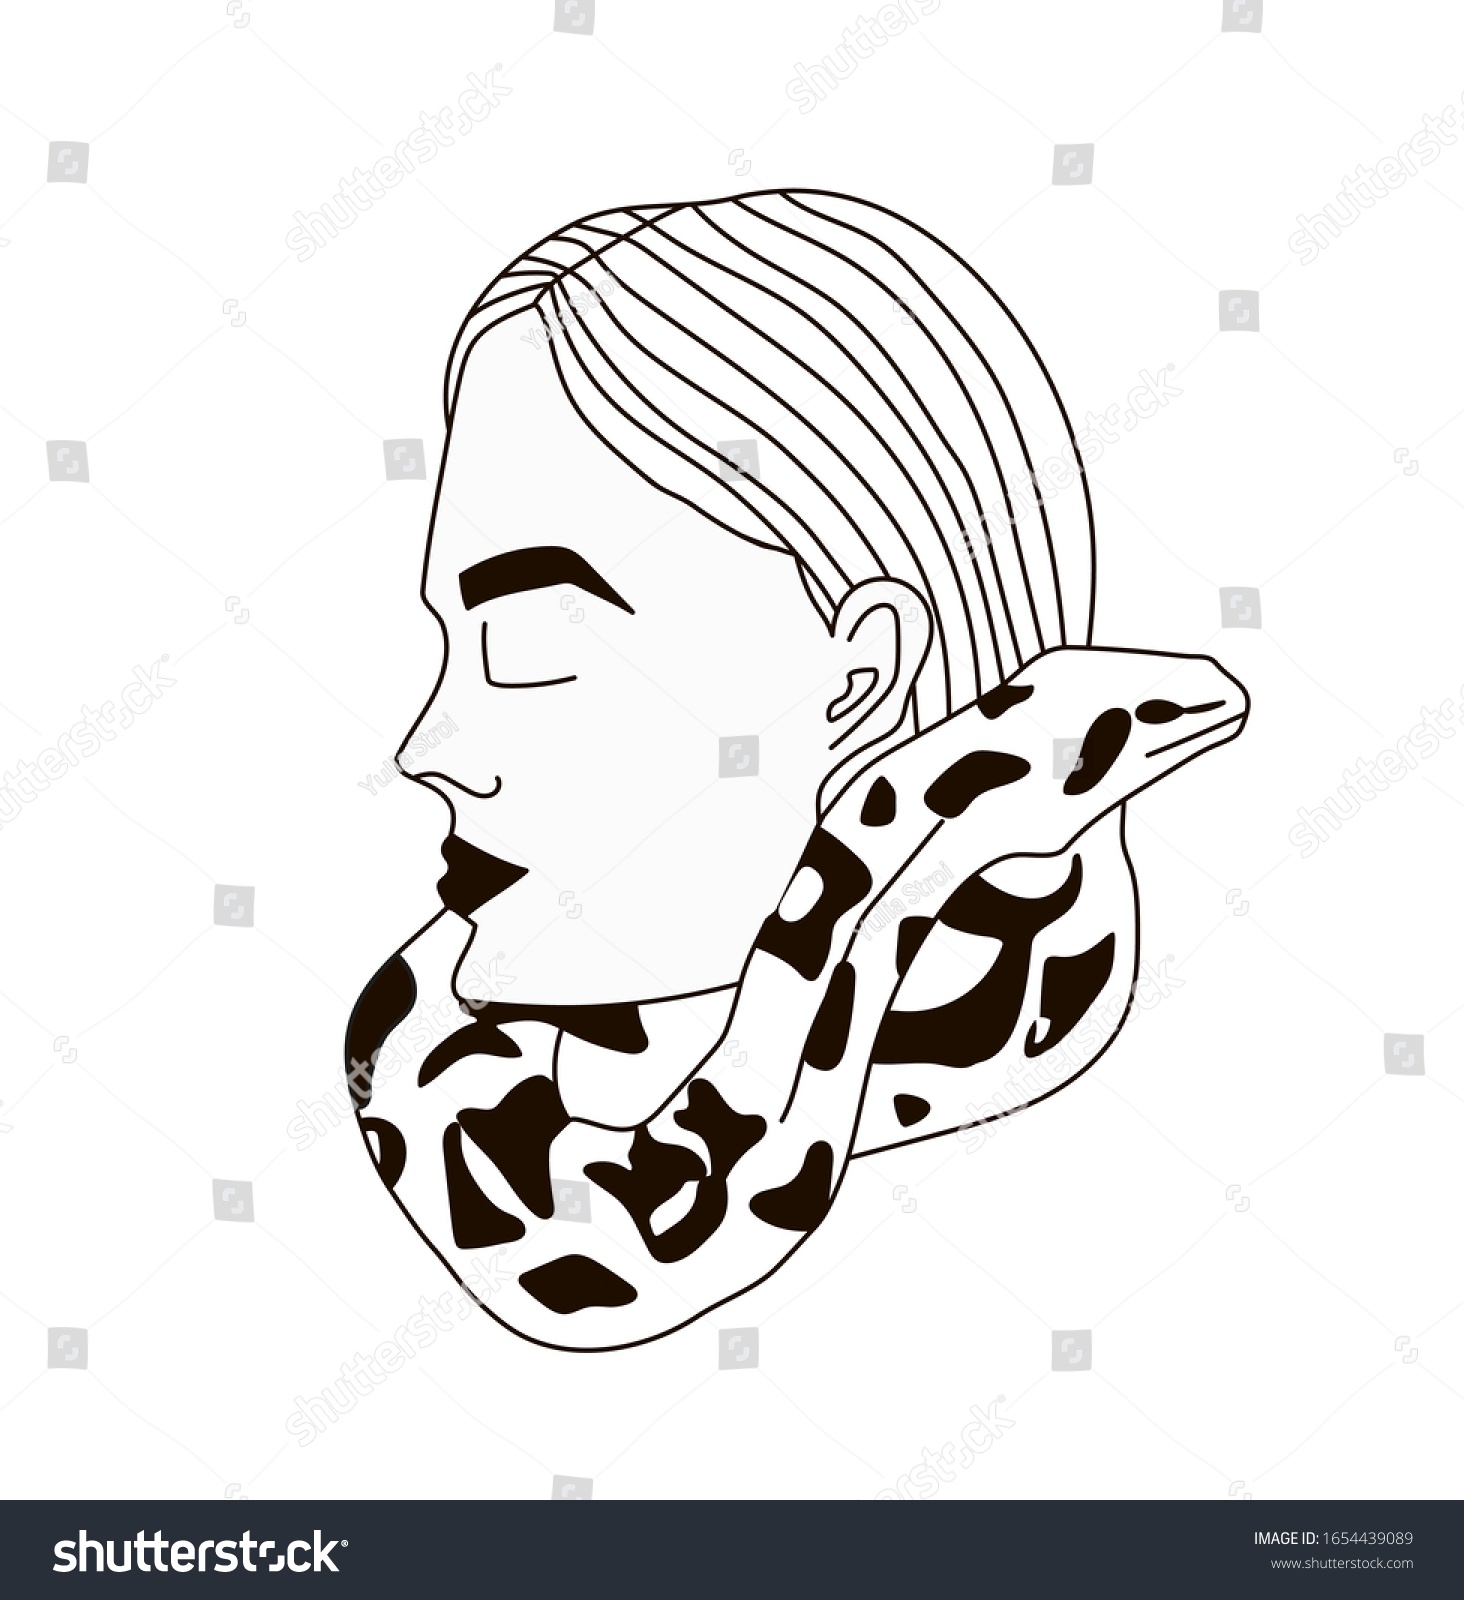 https://image.shutterstock.com/z/stock-vector-vector-illustration-a-girl-with-a-snake-around-her-neck-logo-or-tattoo-design-outline-modern-1654439089.jpg